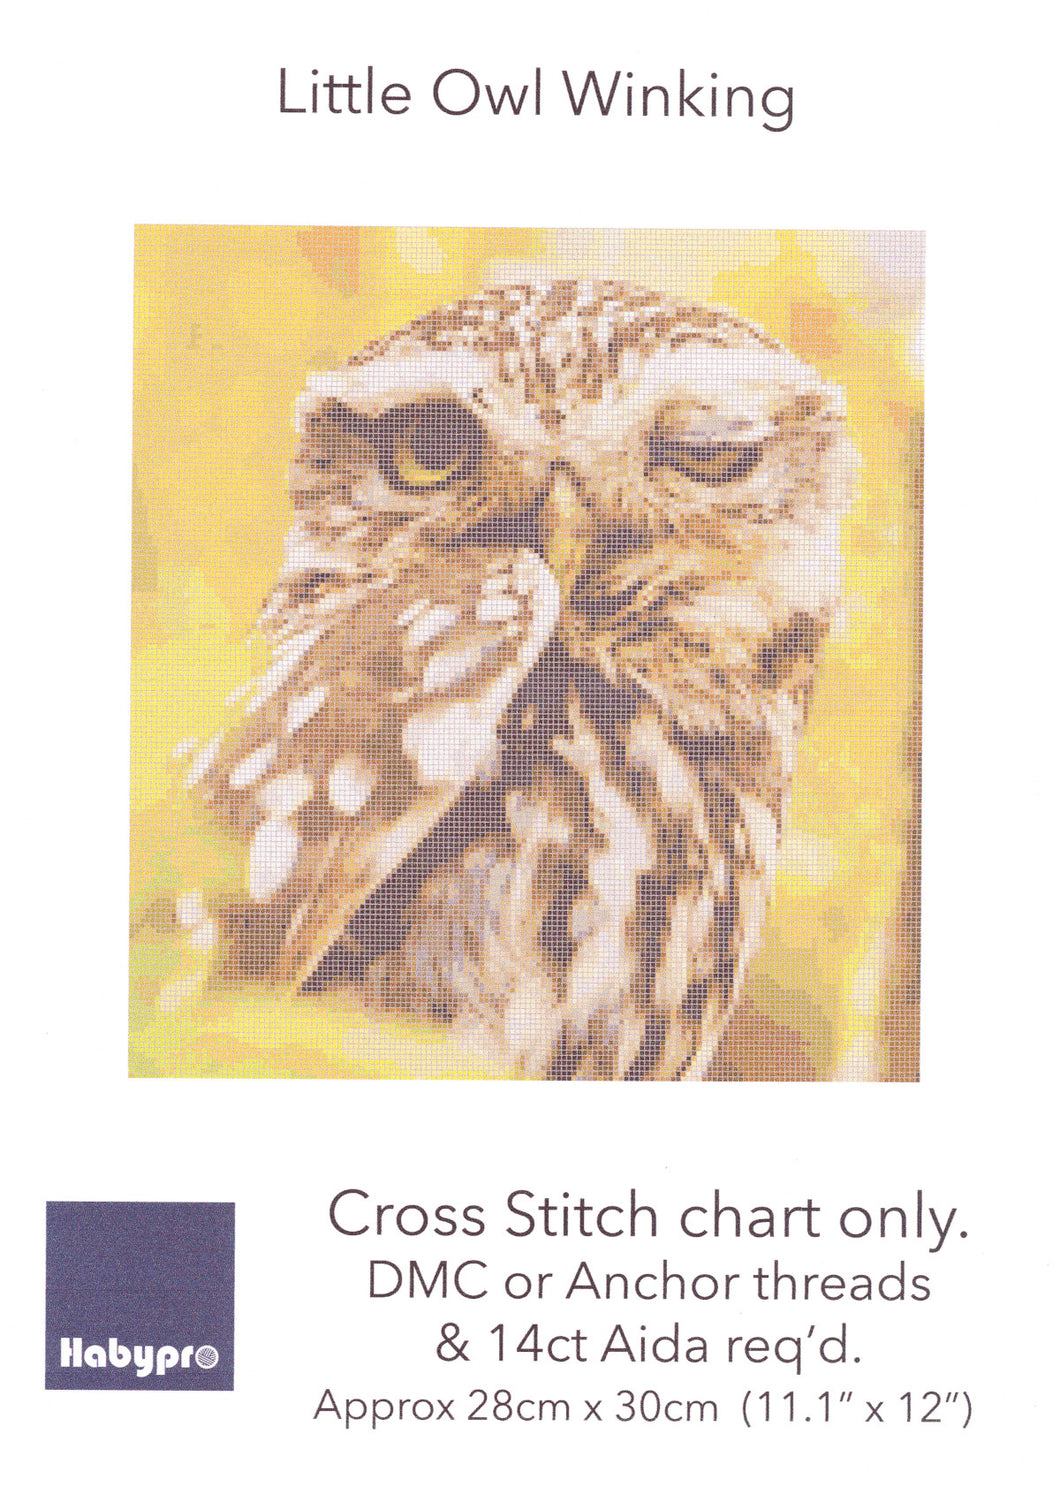 https://images.esellerpro.com/2278/I/200/874/habypro-cross-stitch-little-owl-winking-front.jpg